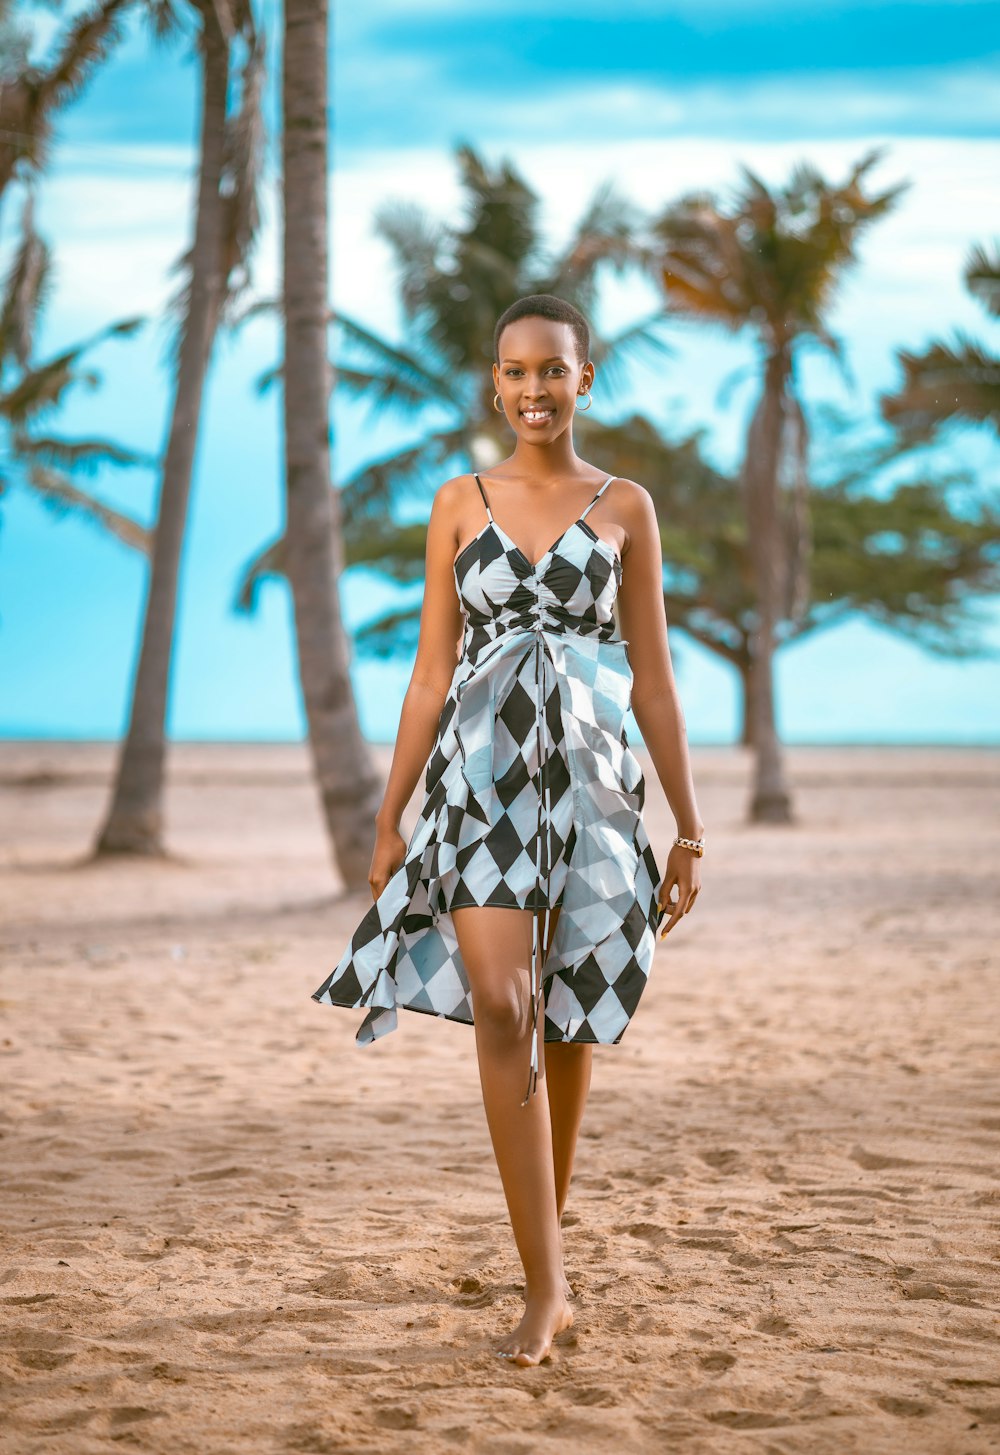 a woman in a dress walking on a beach